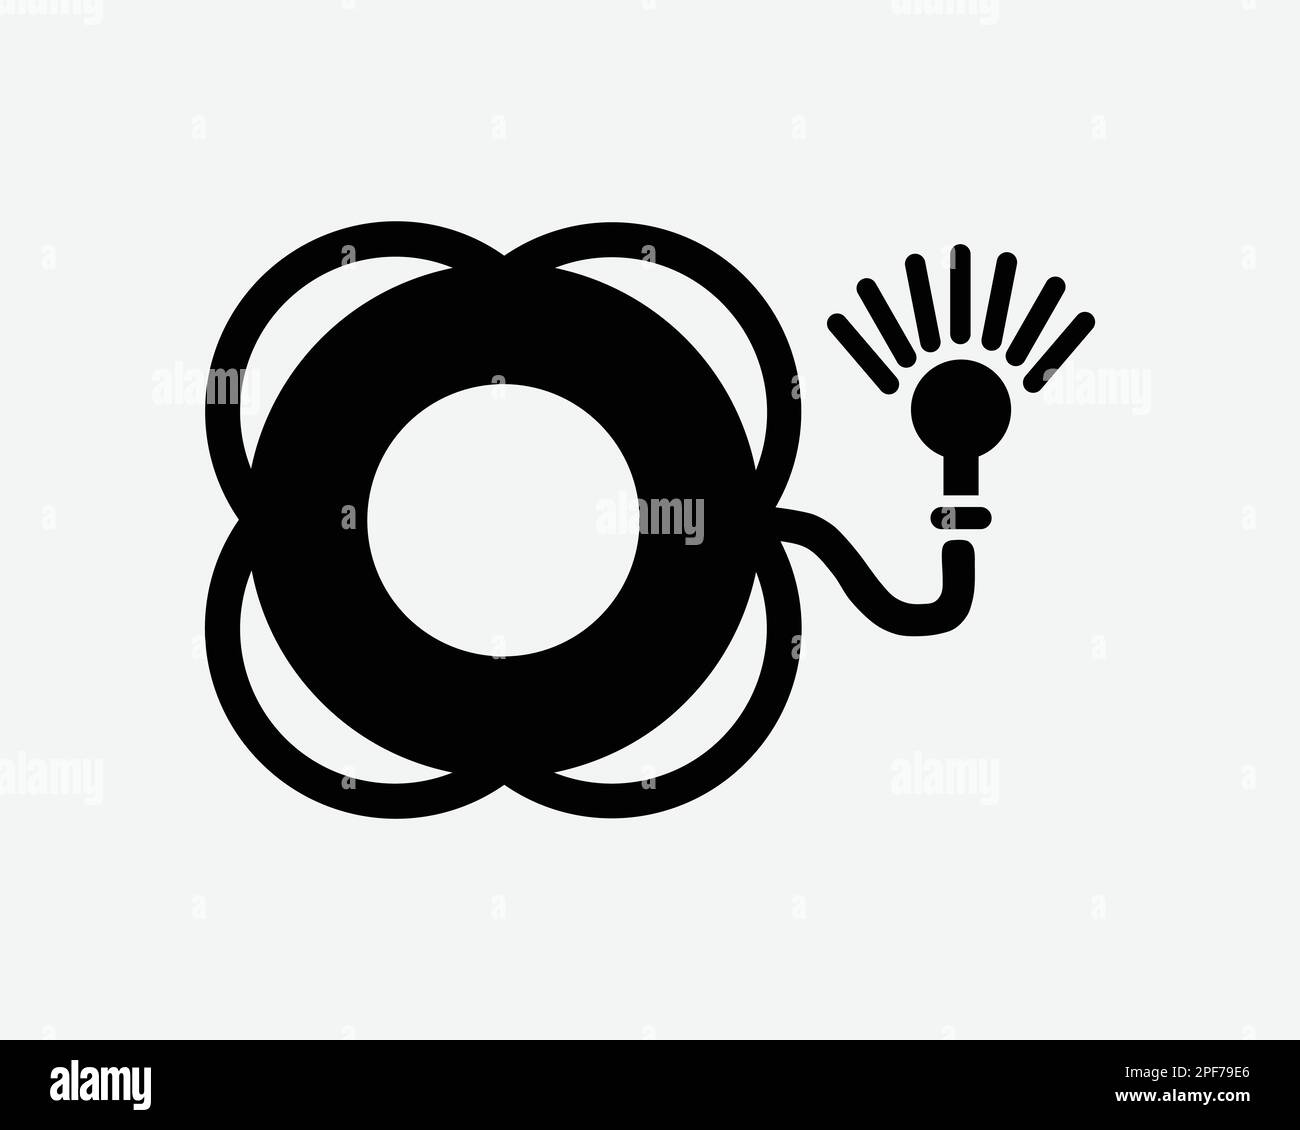 Lifebuoy Ring Life Buoy Lifesaver Light Flash Flashing Black White Silhouette Sign Symbol Icon Graphic Clipart Artwork Illustration Pictogram Vector Stock Vector